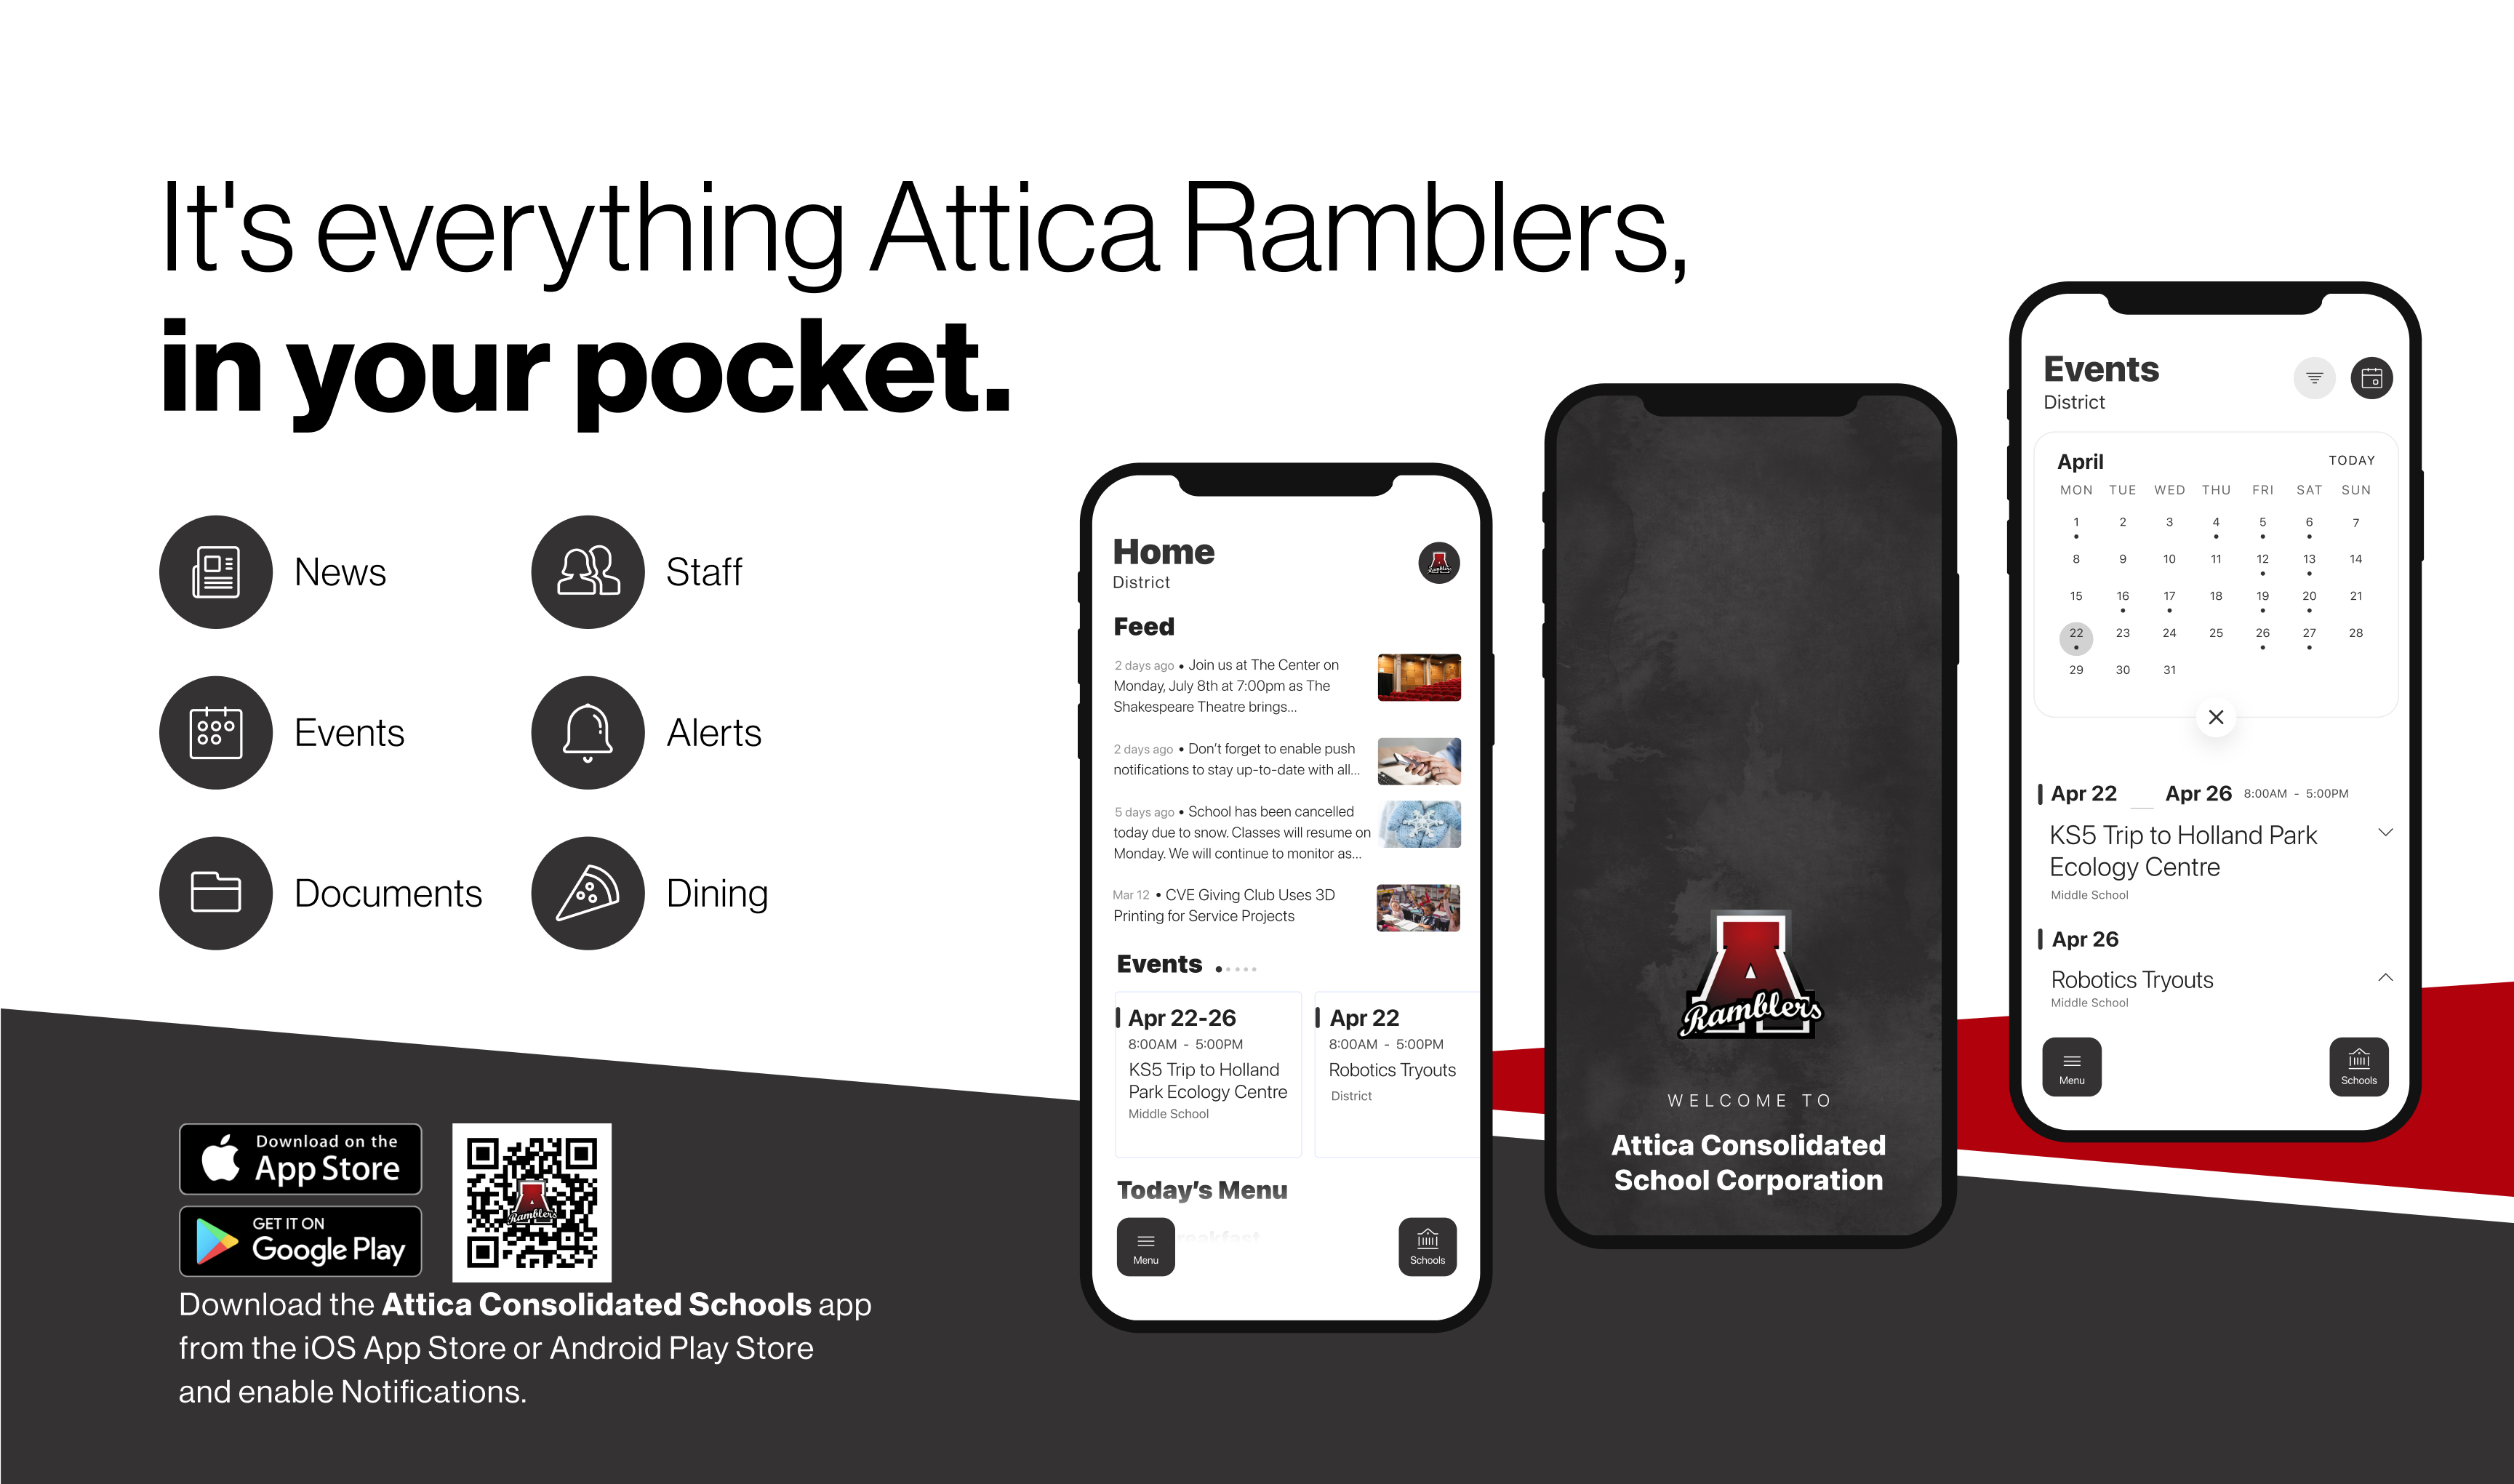 attica ramblers in your pocket